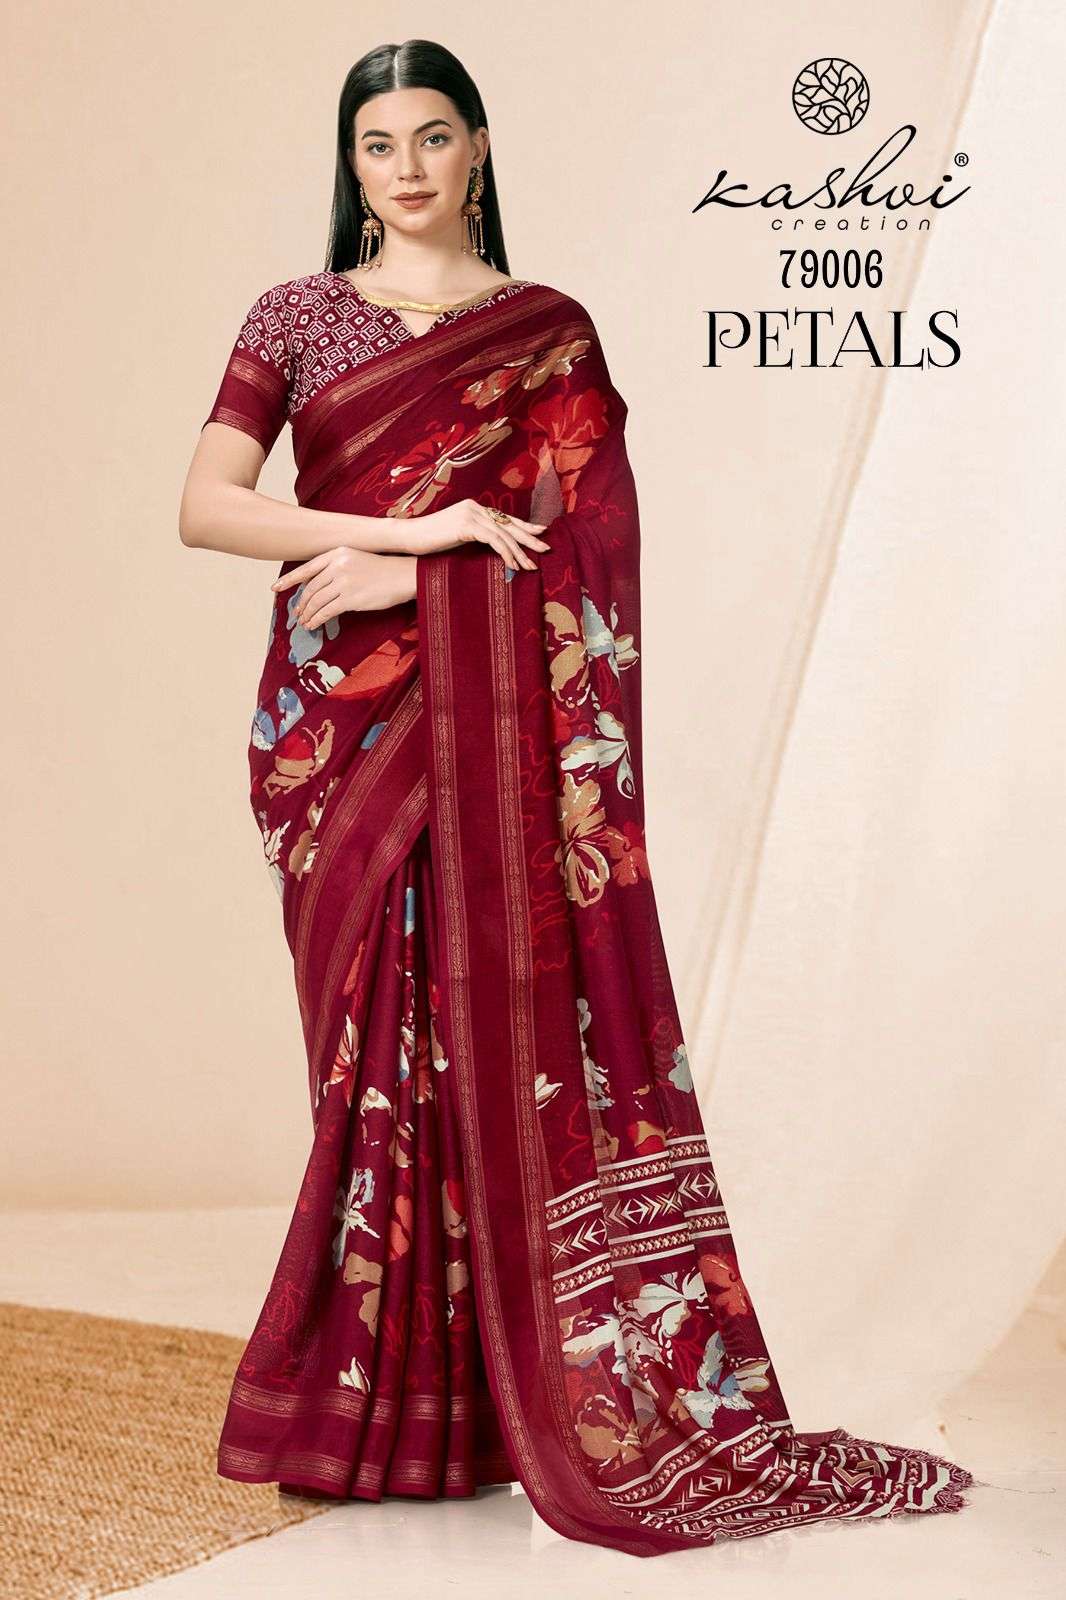 kashvi creation petals 79001-79008 daily uses designer saree catalogue wholesaler surat